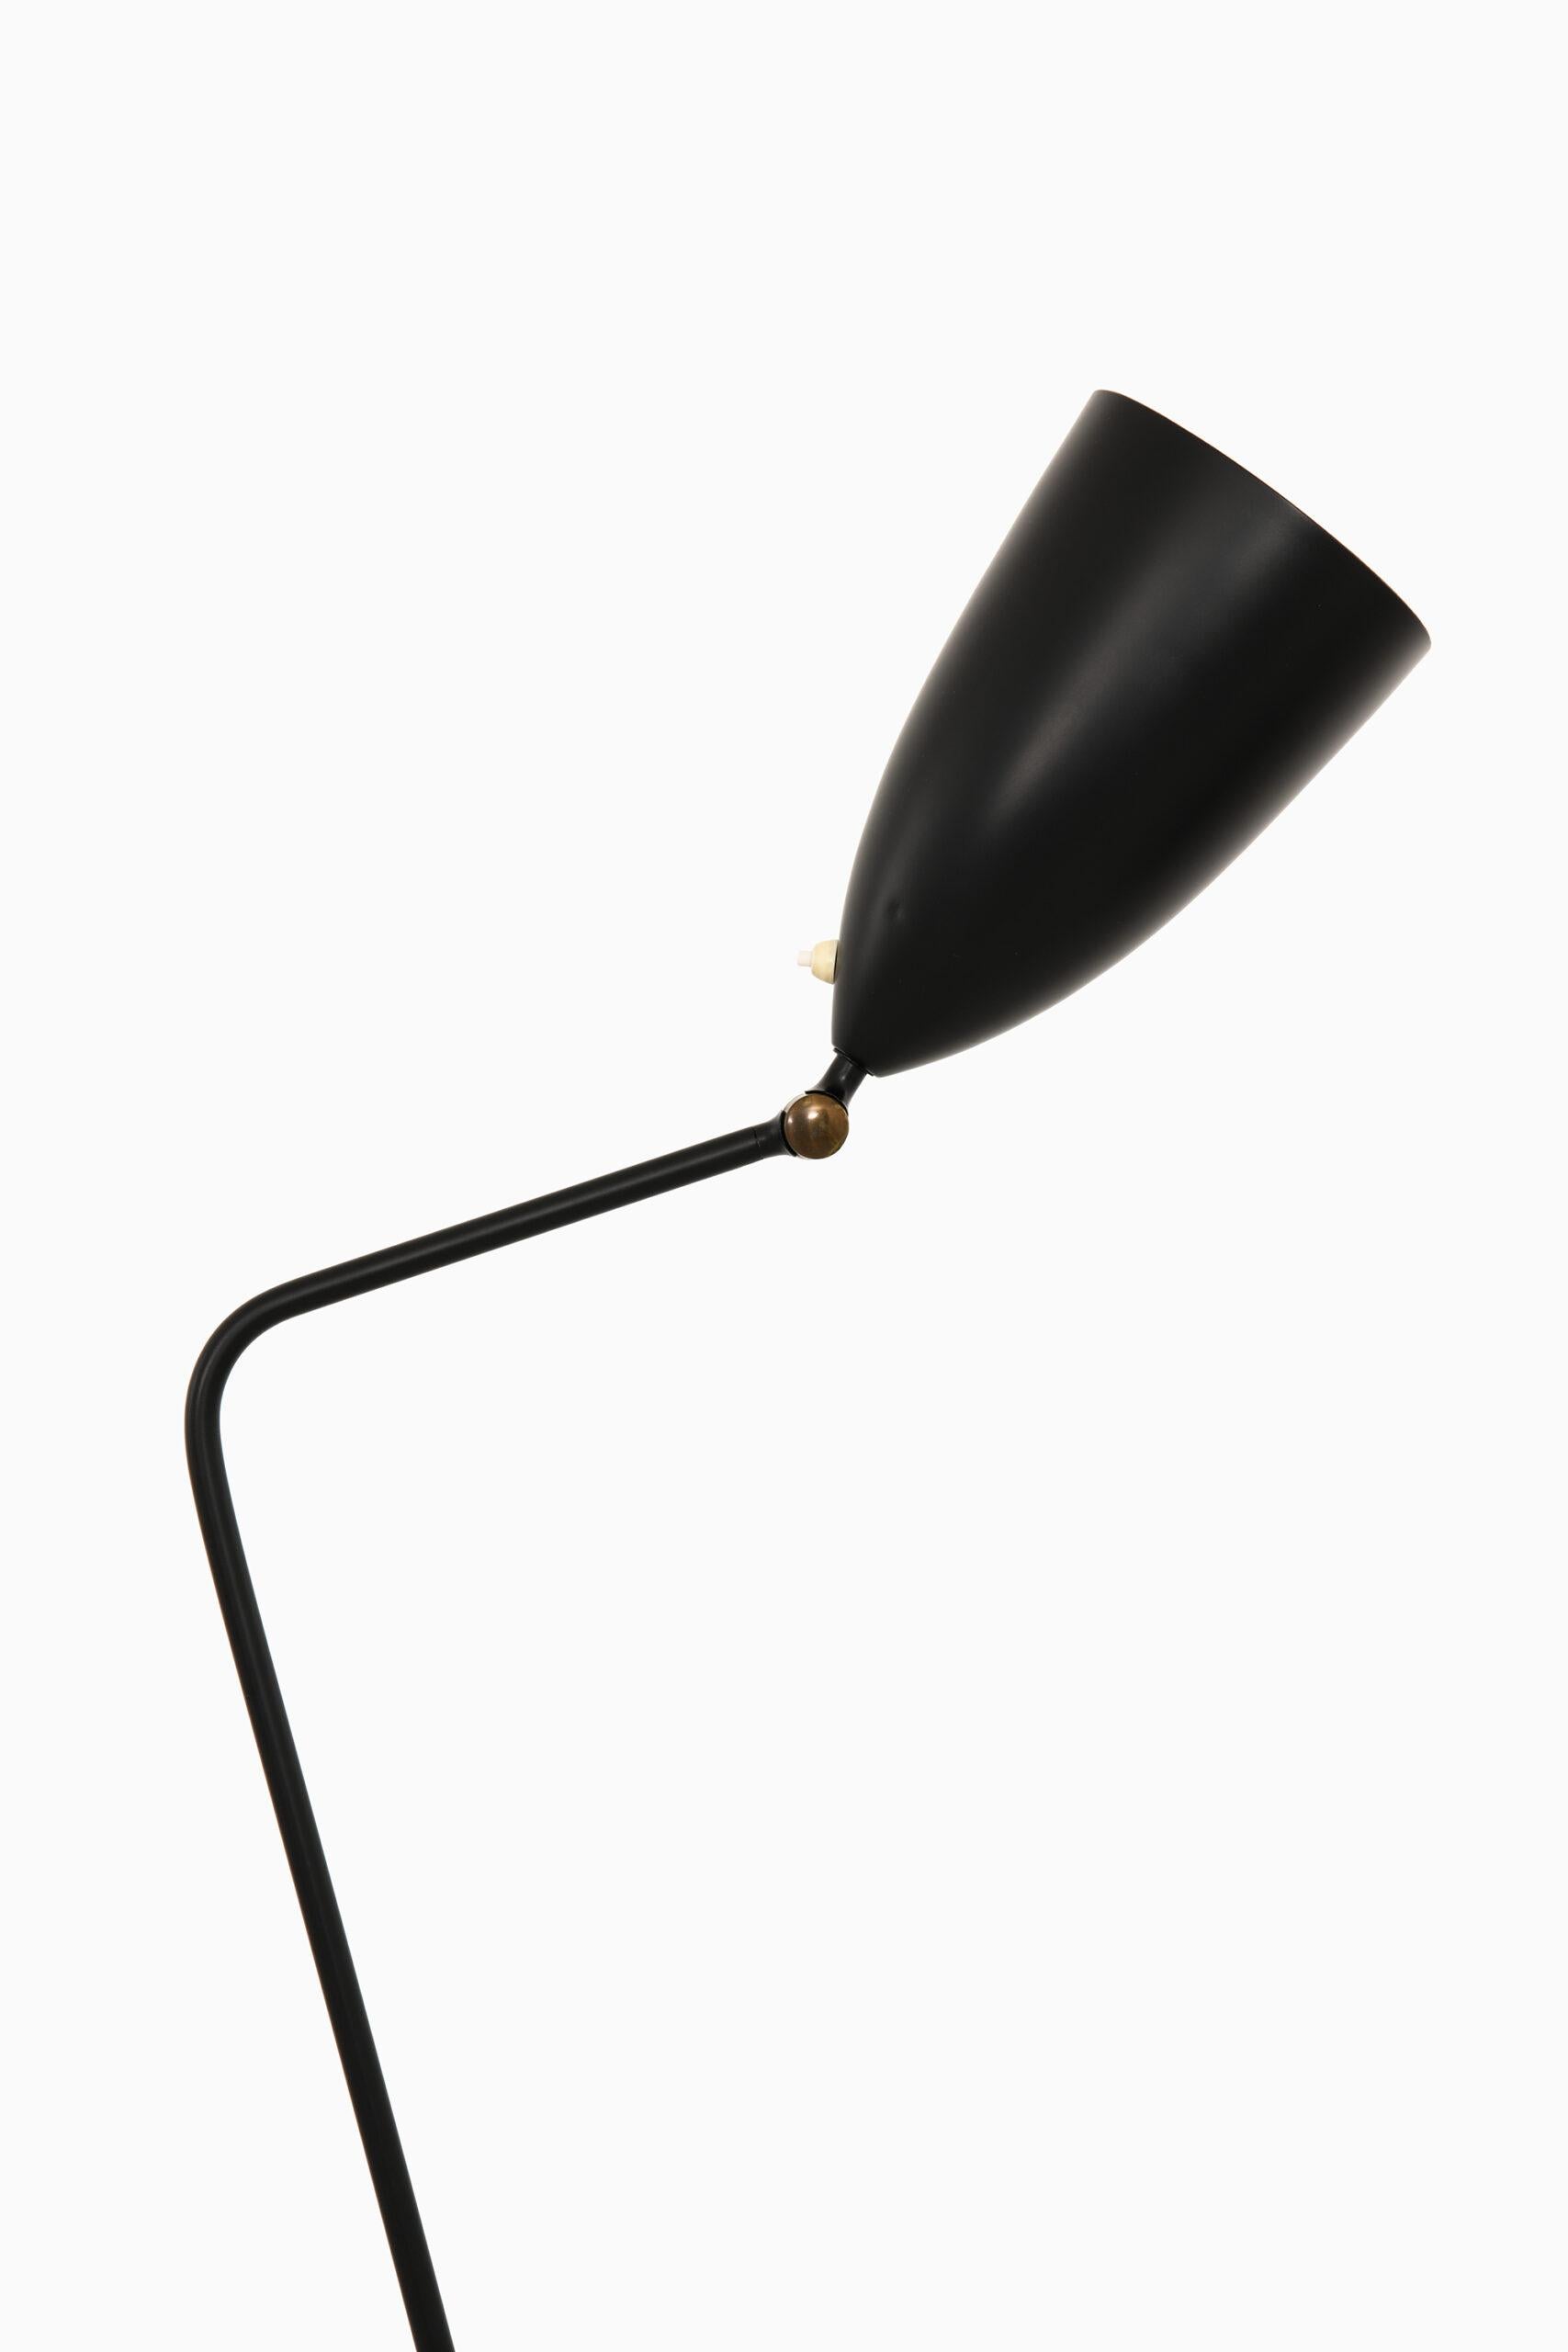 Metal Greta Magnusson Grossman Floor Lamp Model G-33 / Grasshopper Produced by Bergbom For Sale